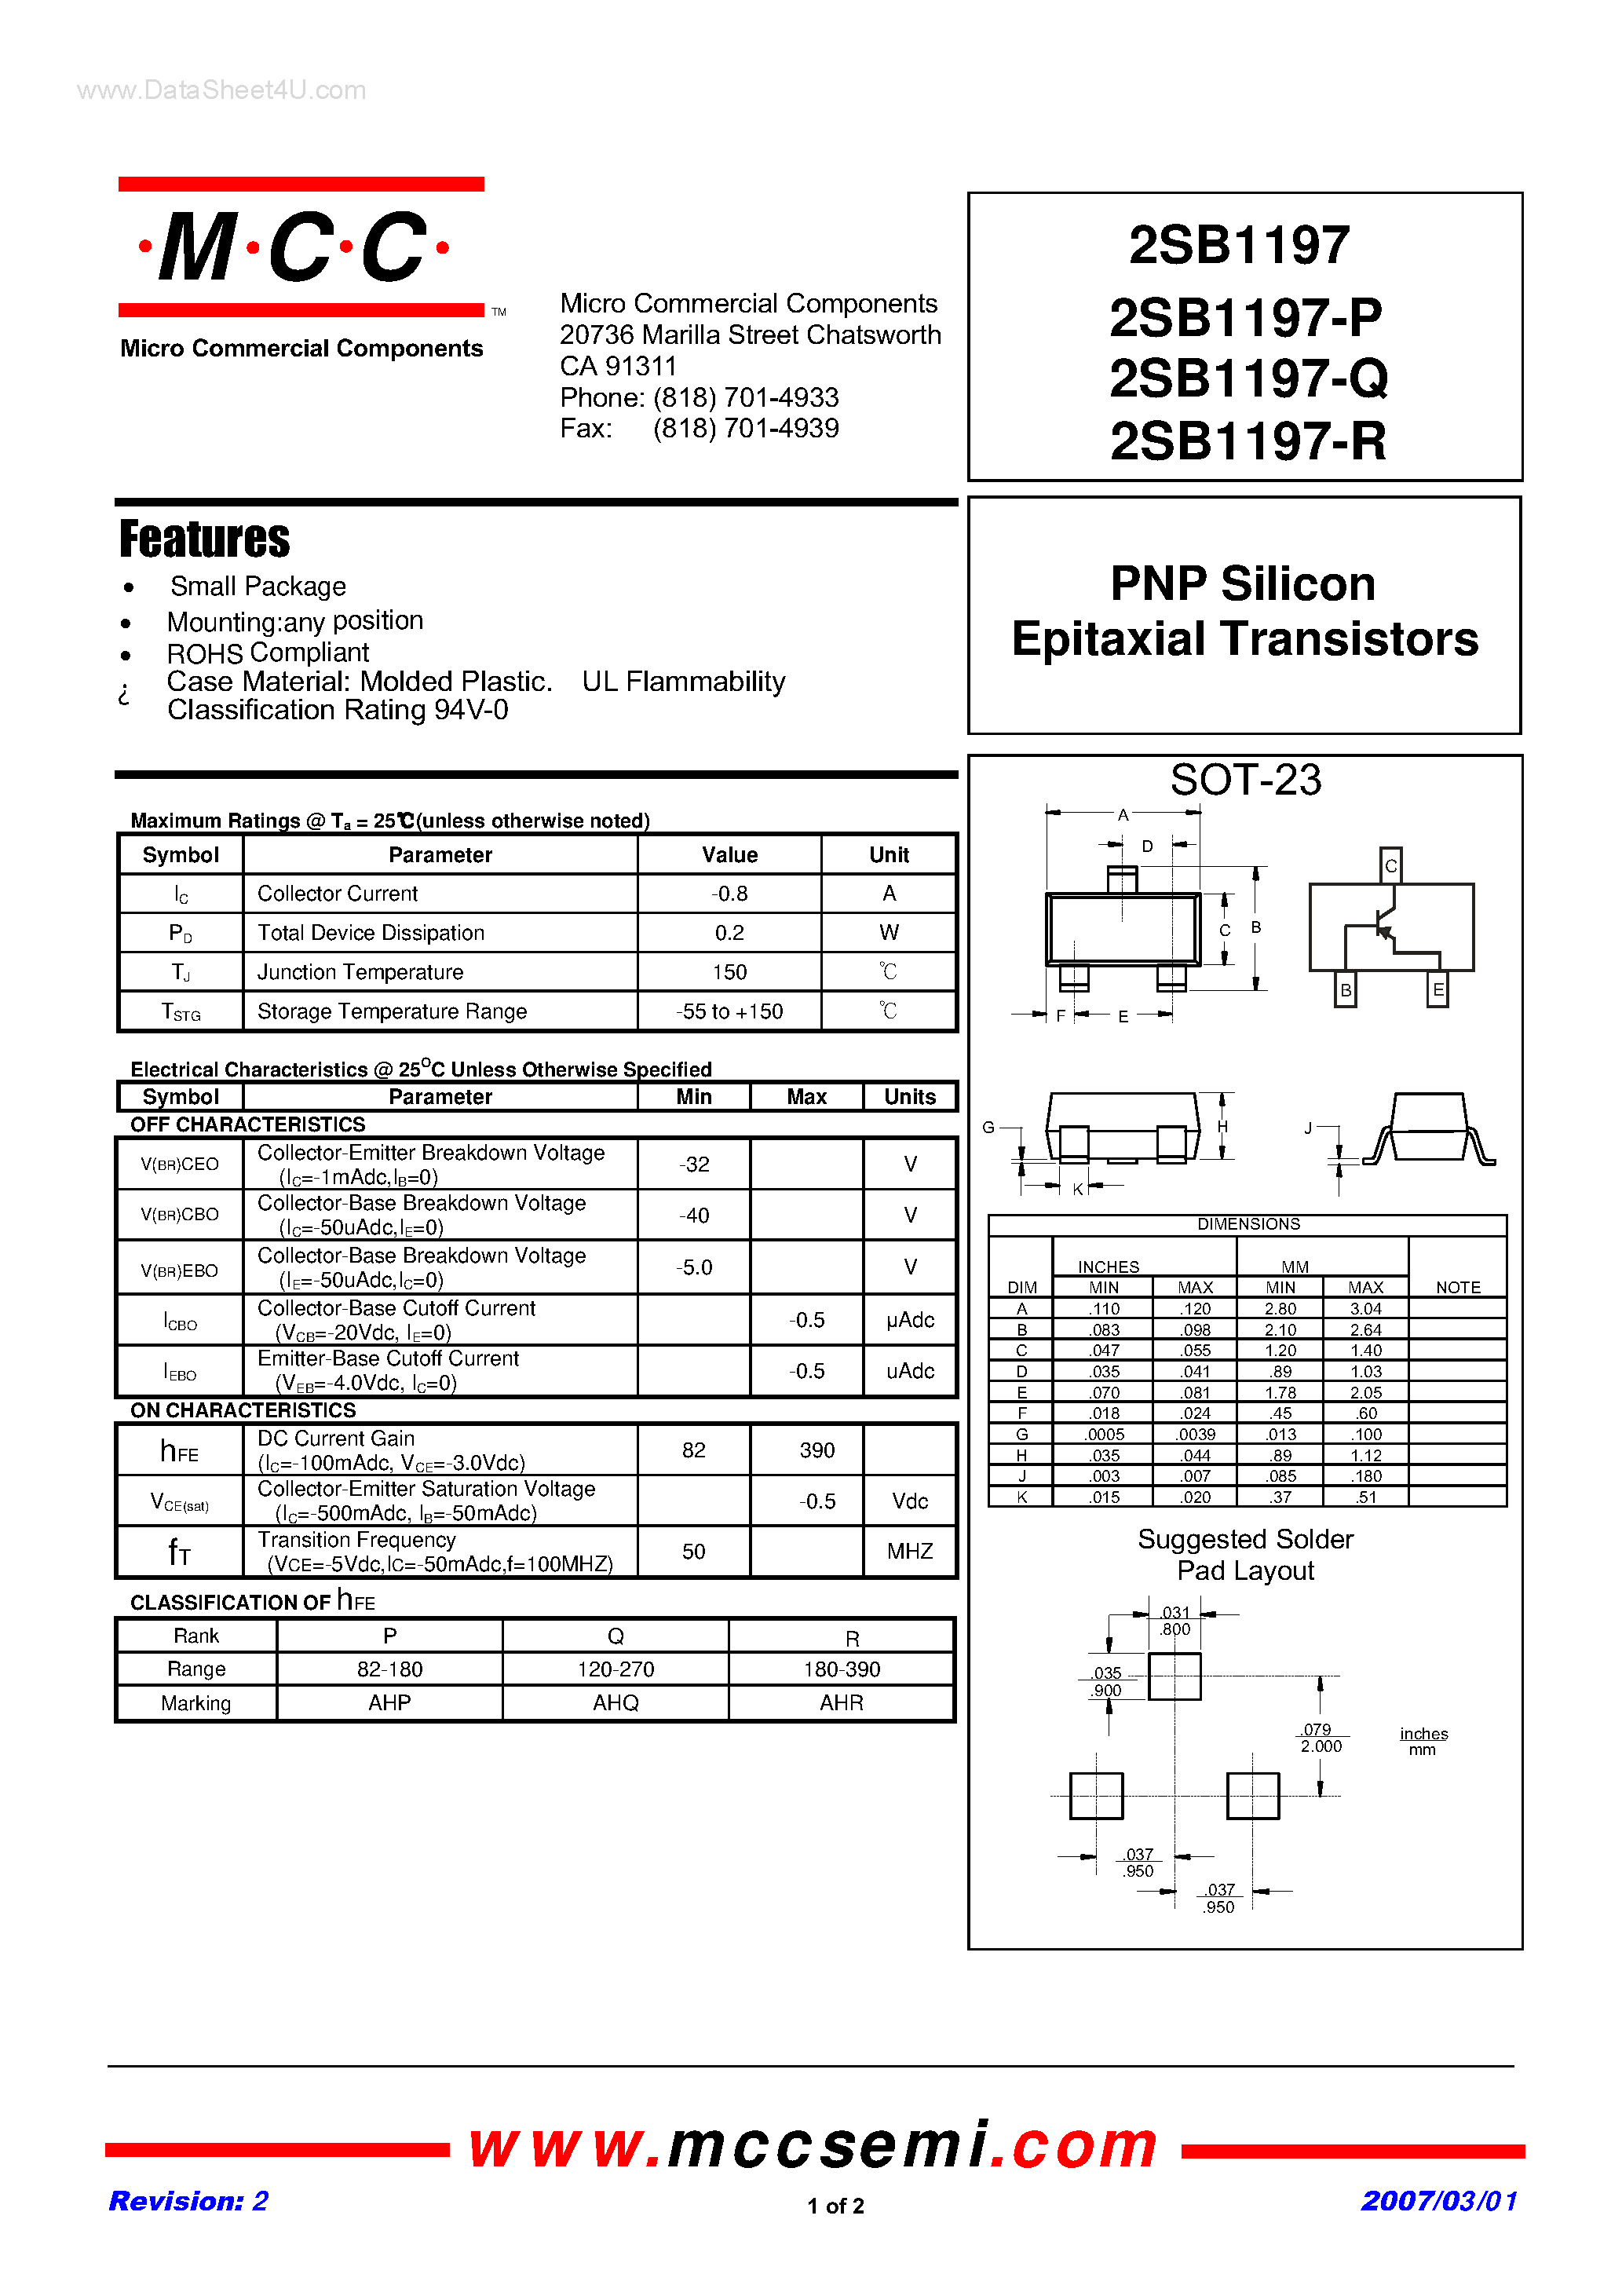 Datasheet 2SB1197 - (2SB1197-xx) PNP Silicon Epitaxial Transistors page 1